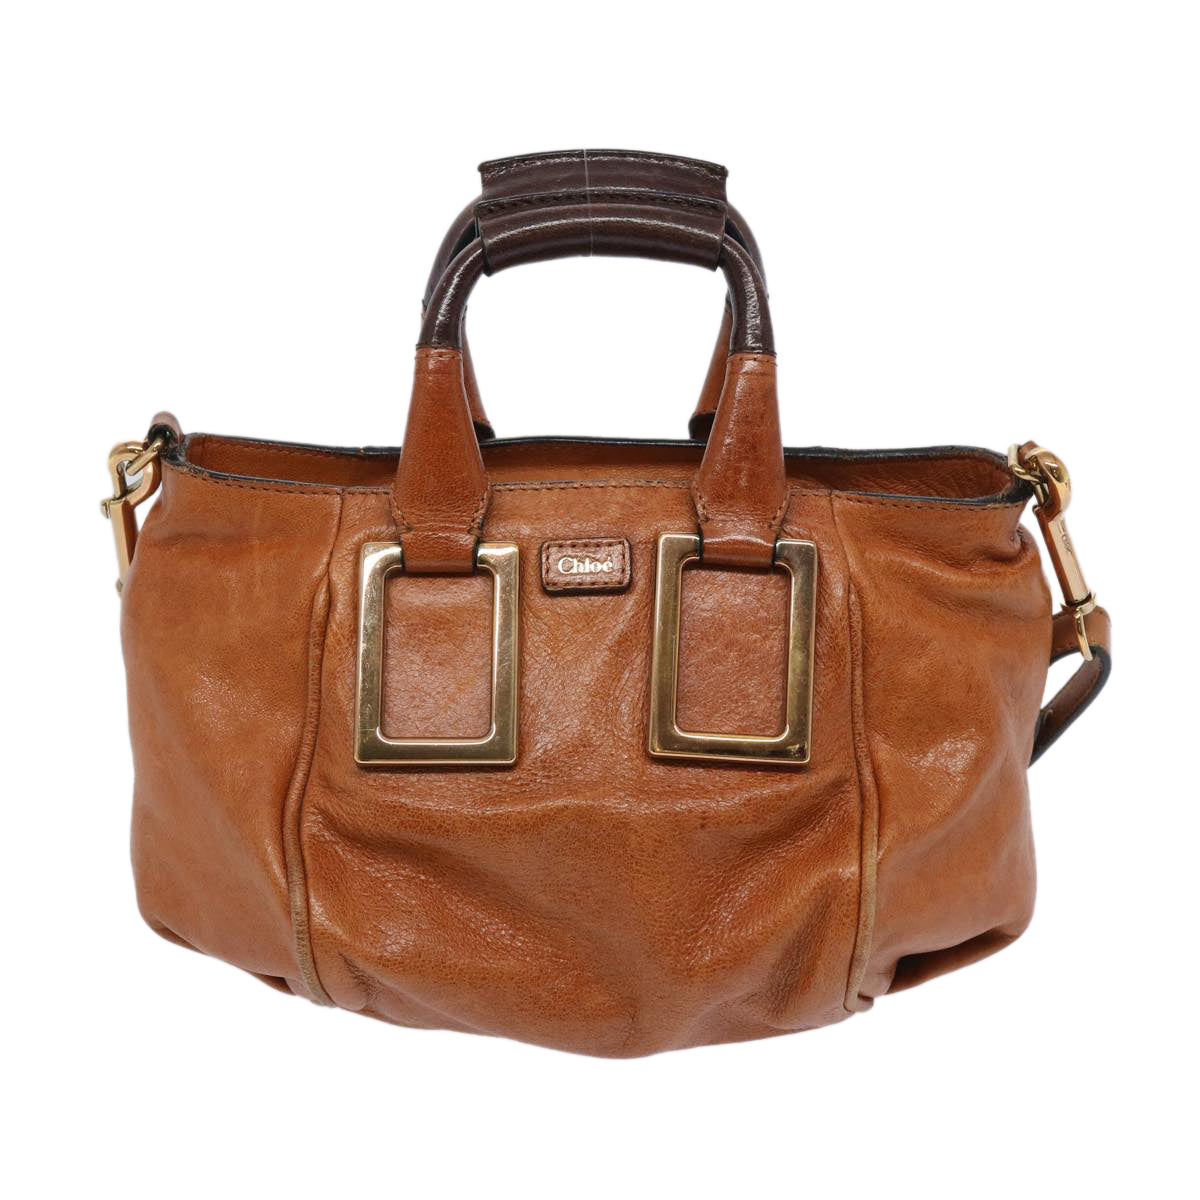 Chloe Etel Hand Bag Leather 2way Brown 01 11 50 Auth yk10588 - 0